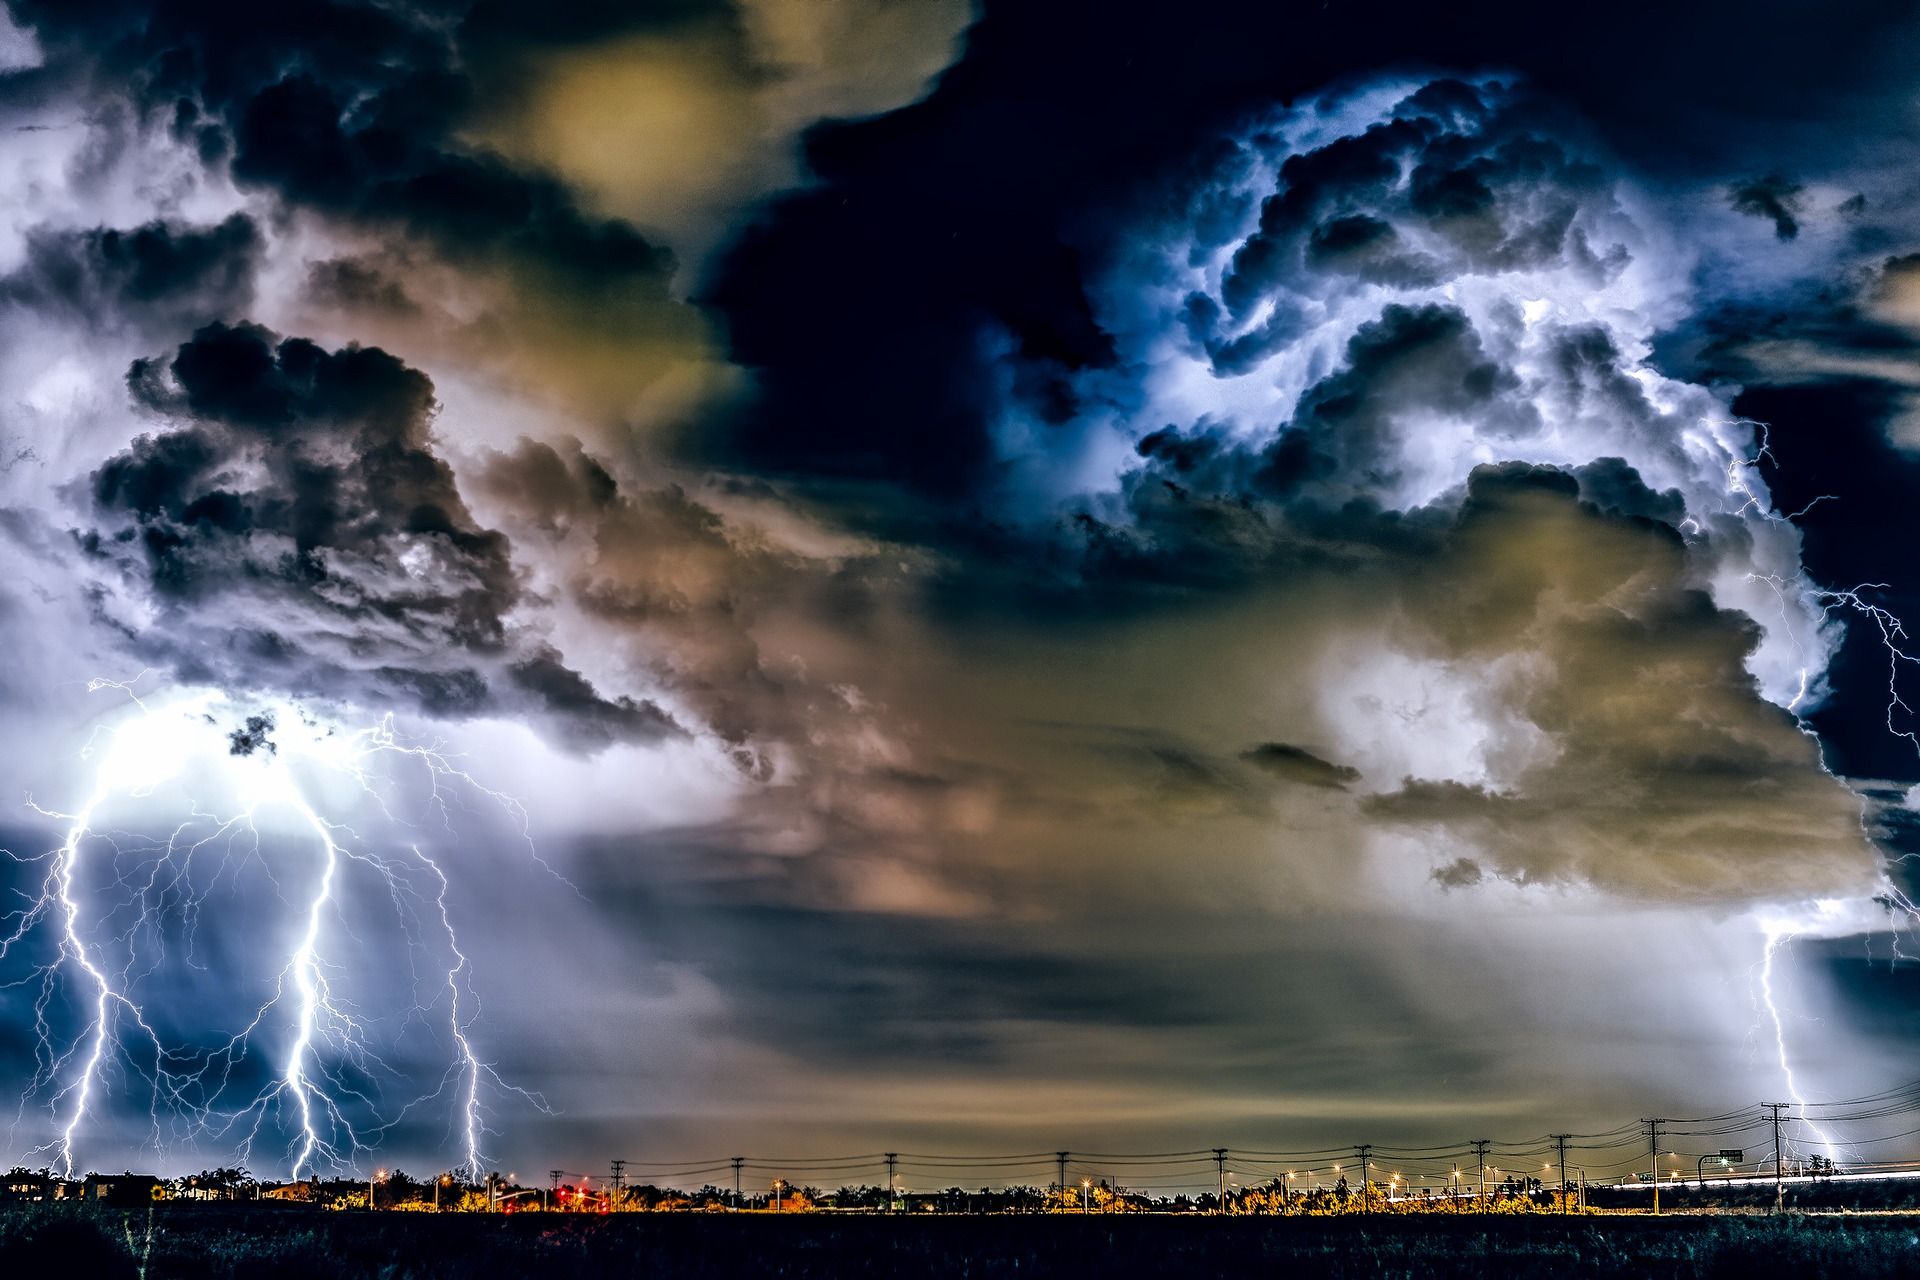 A lightning storm over a city